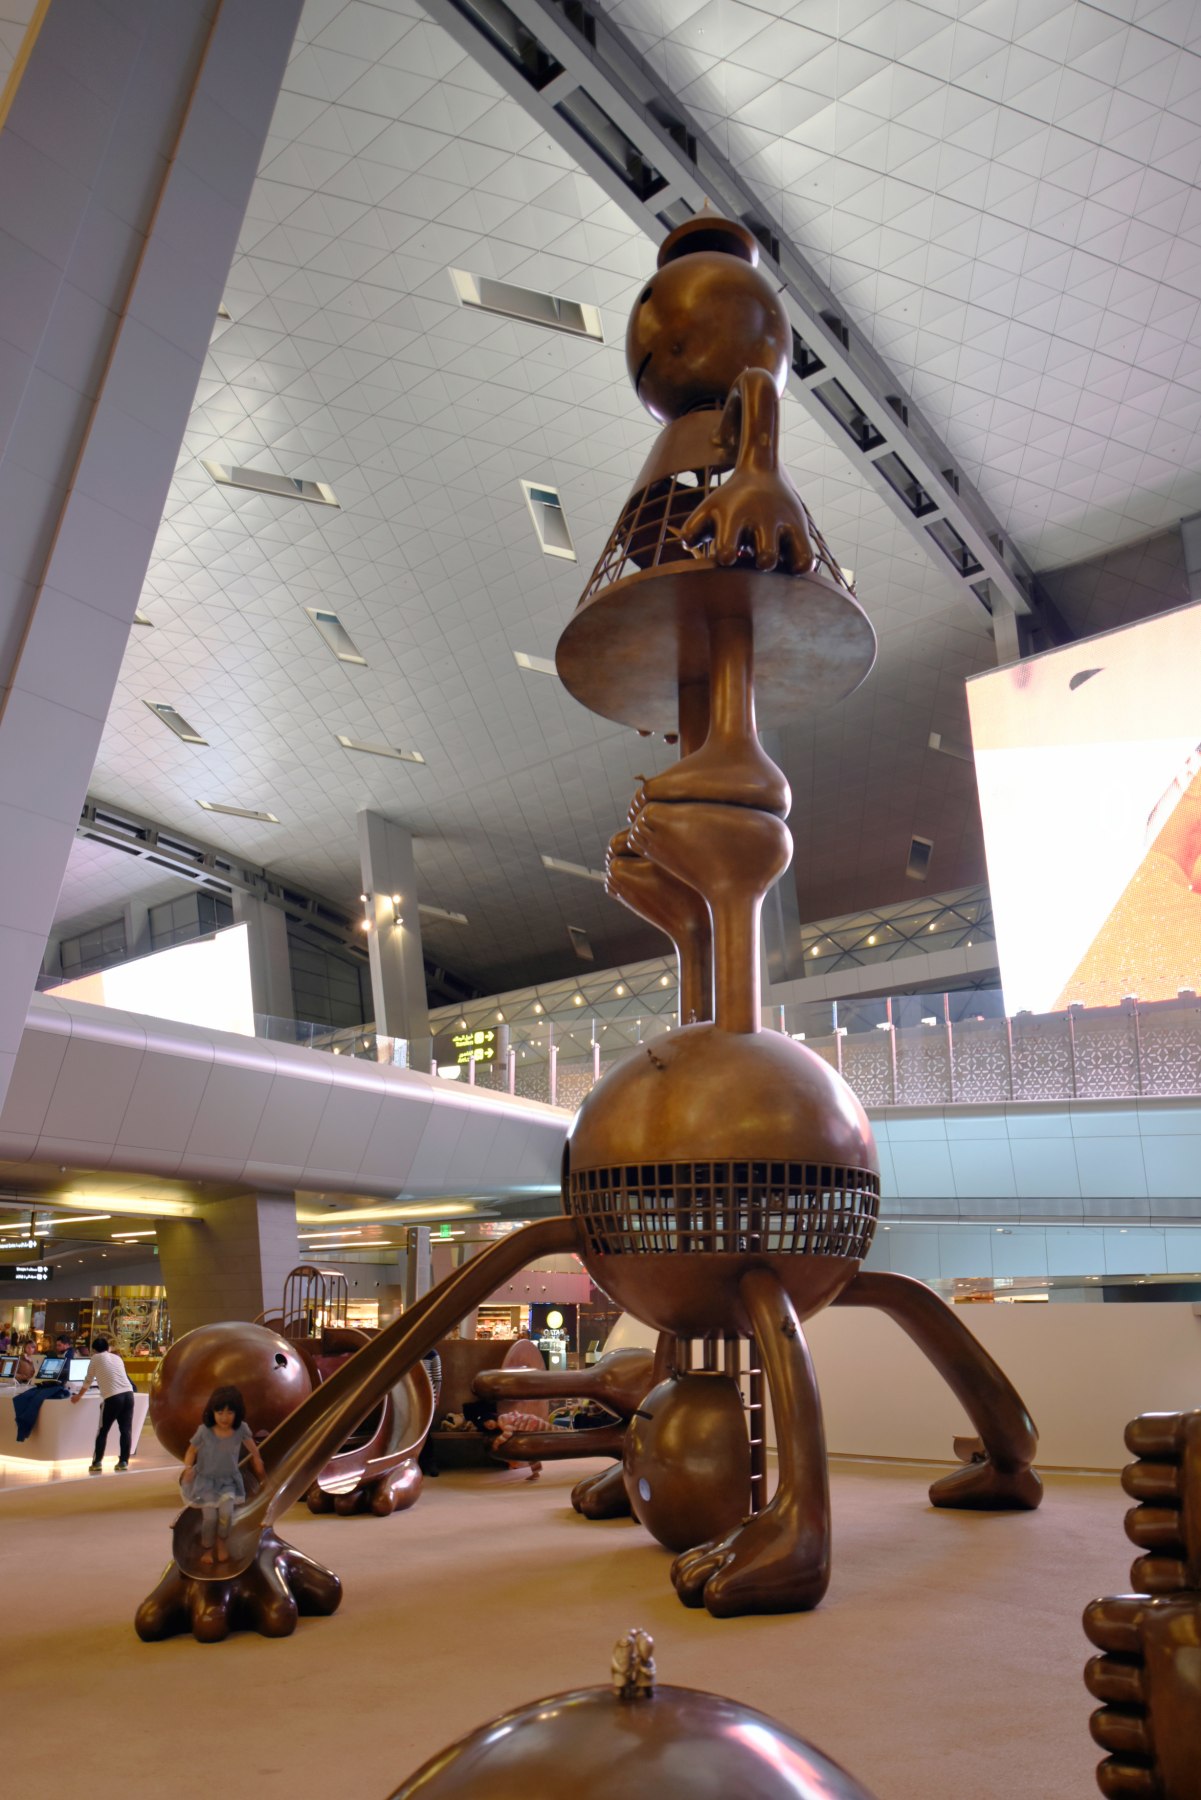 Other Worlds, Hamad International Airport, Doha, Qatar